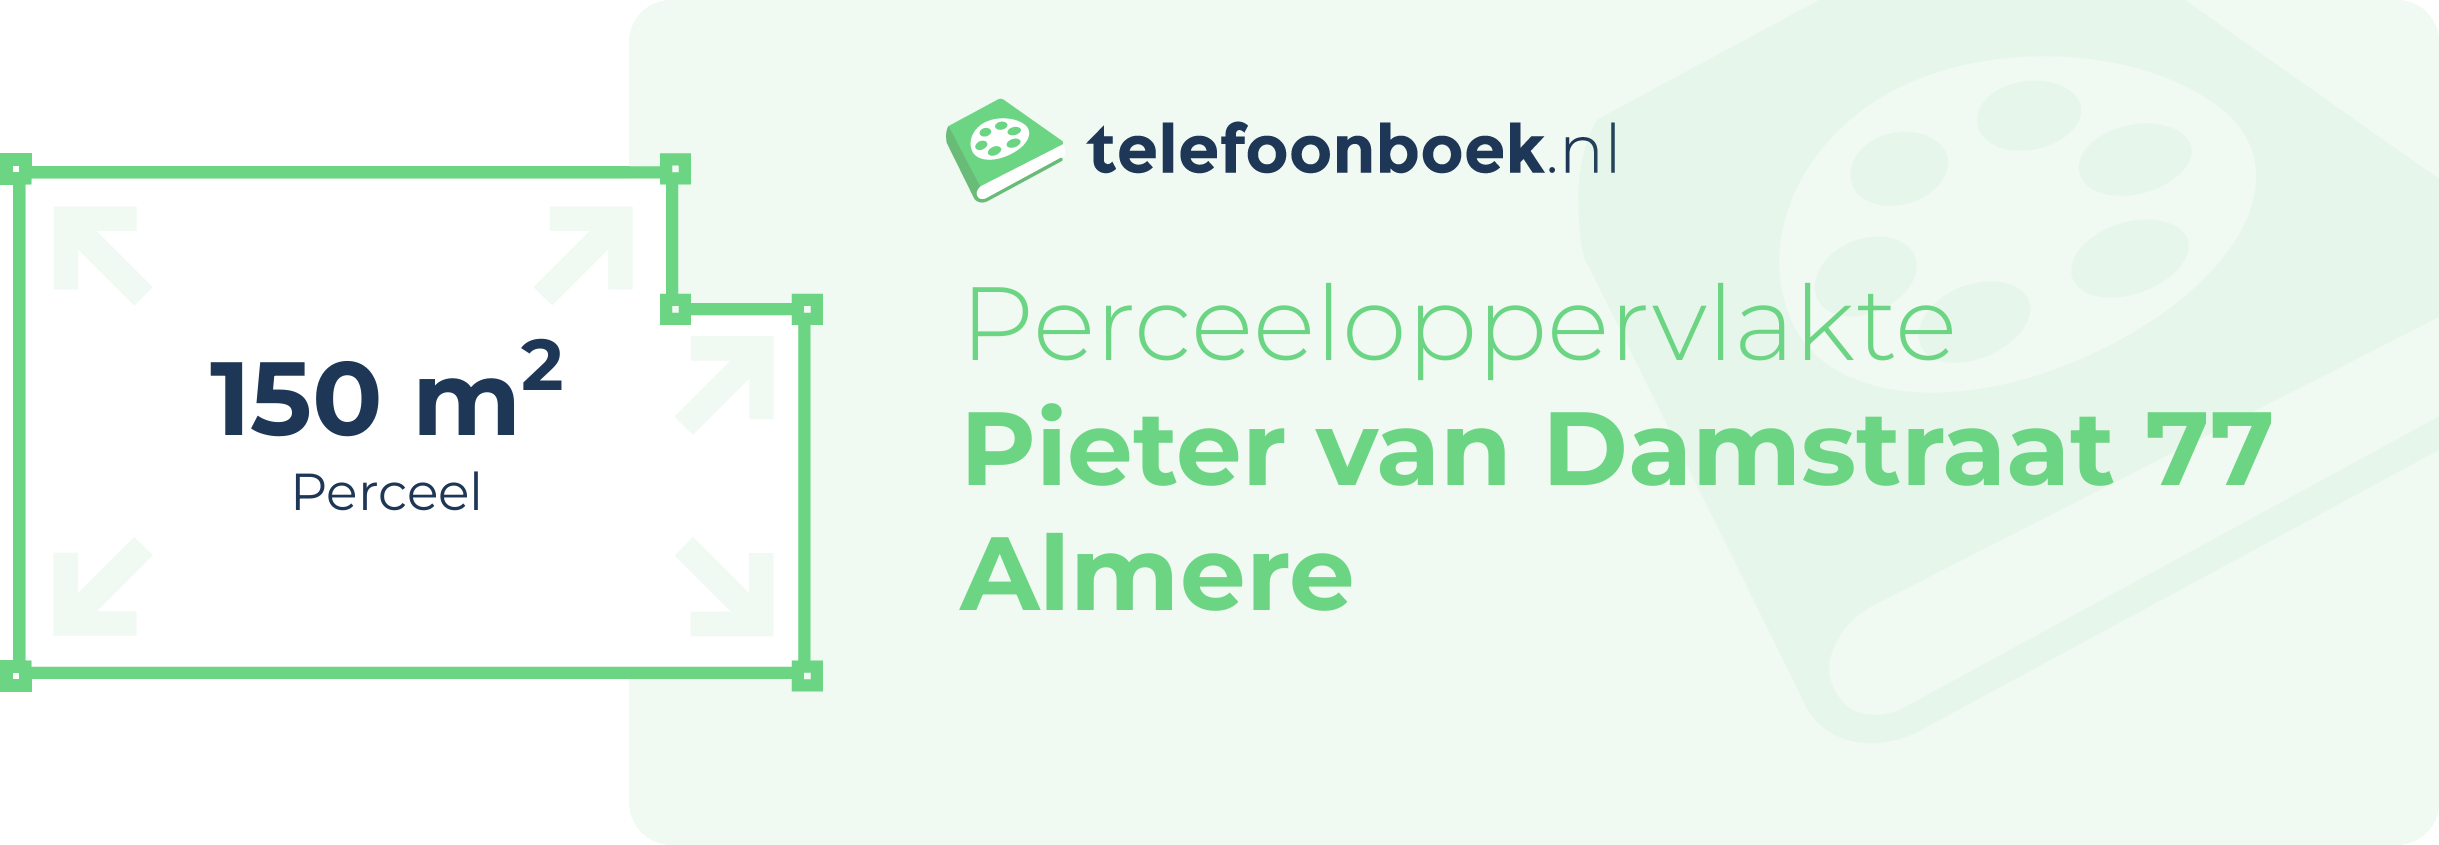 Perceeloppervlakte Pieter Van Damstraat 77 Almere